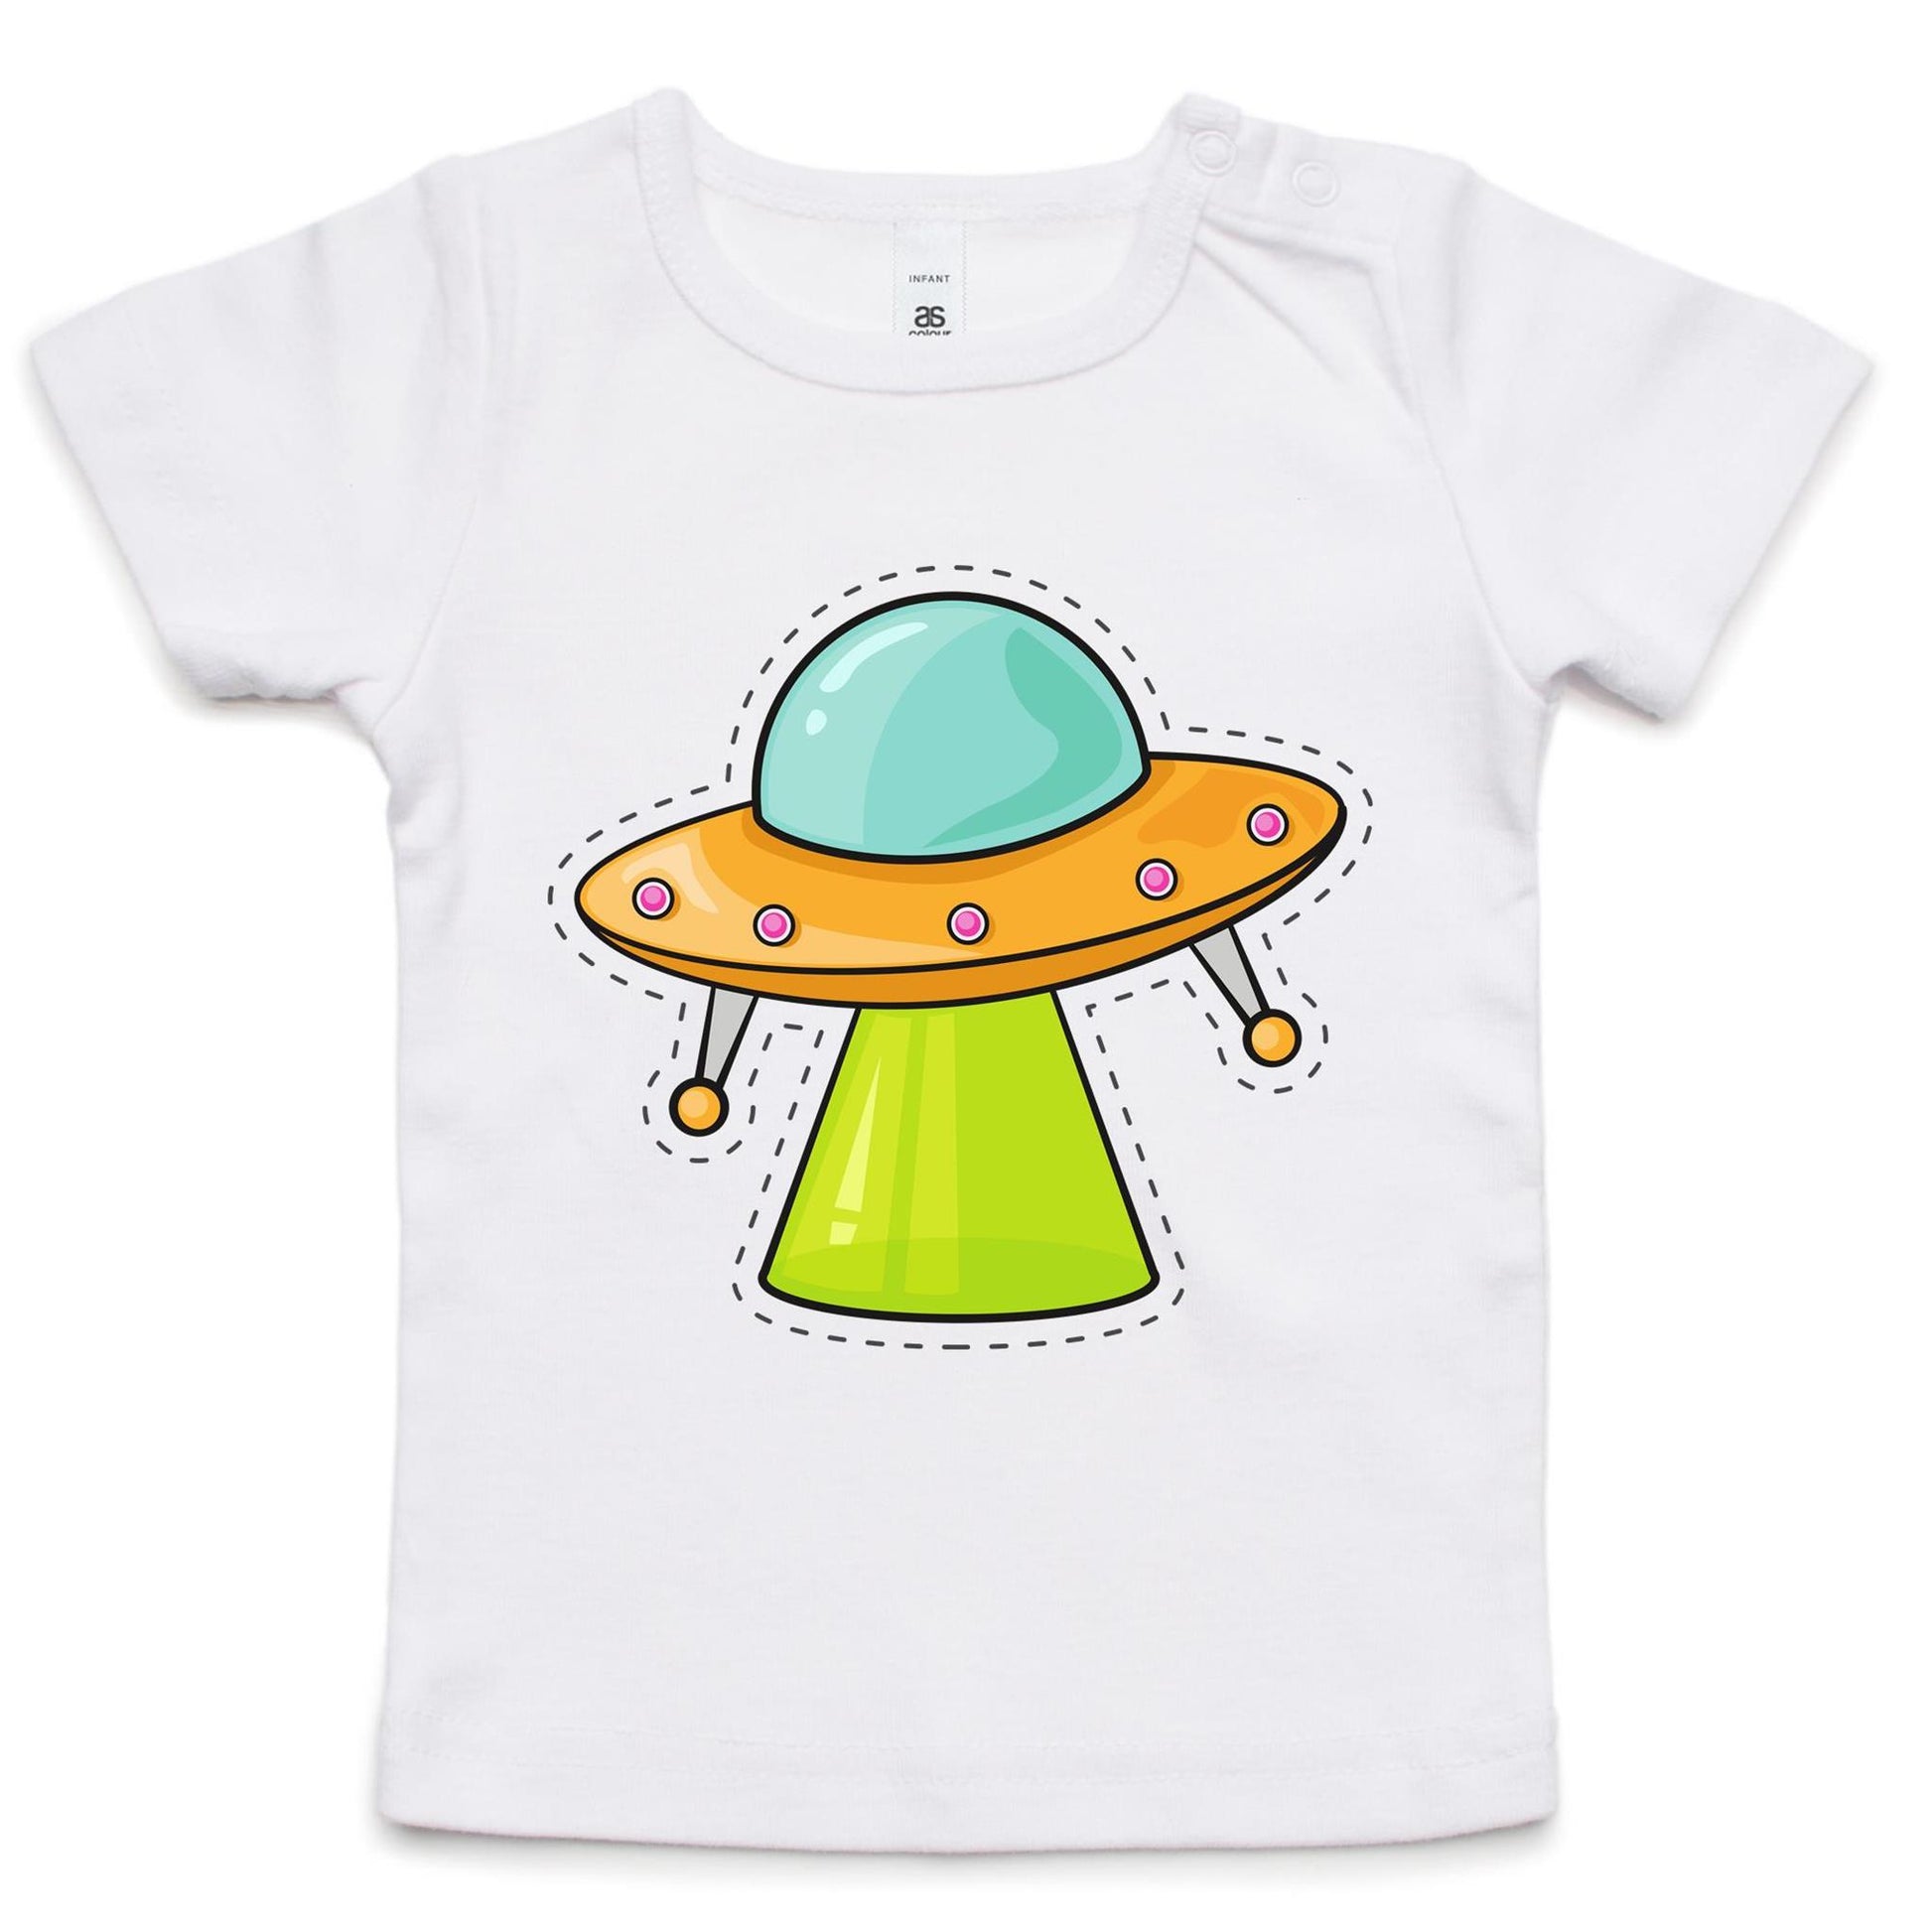 Alien UFO - Baby T-shirt White Baby T-shirt kids Retro Sci Fi Space